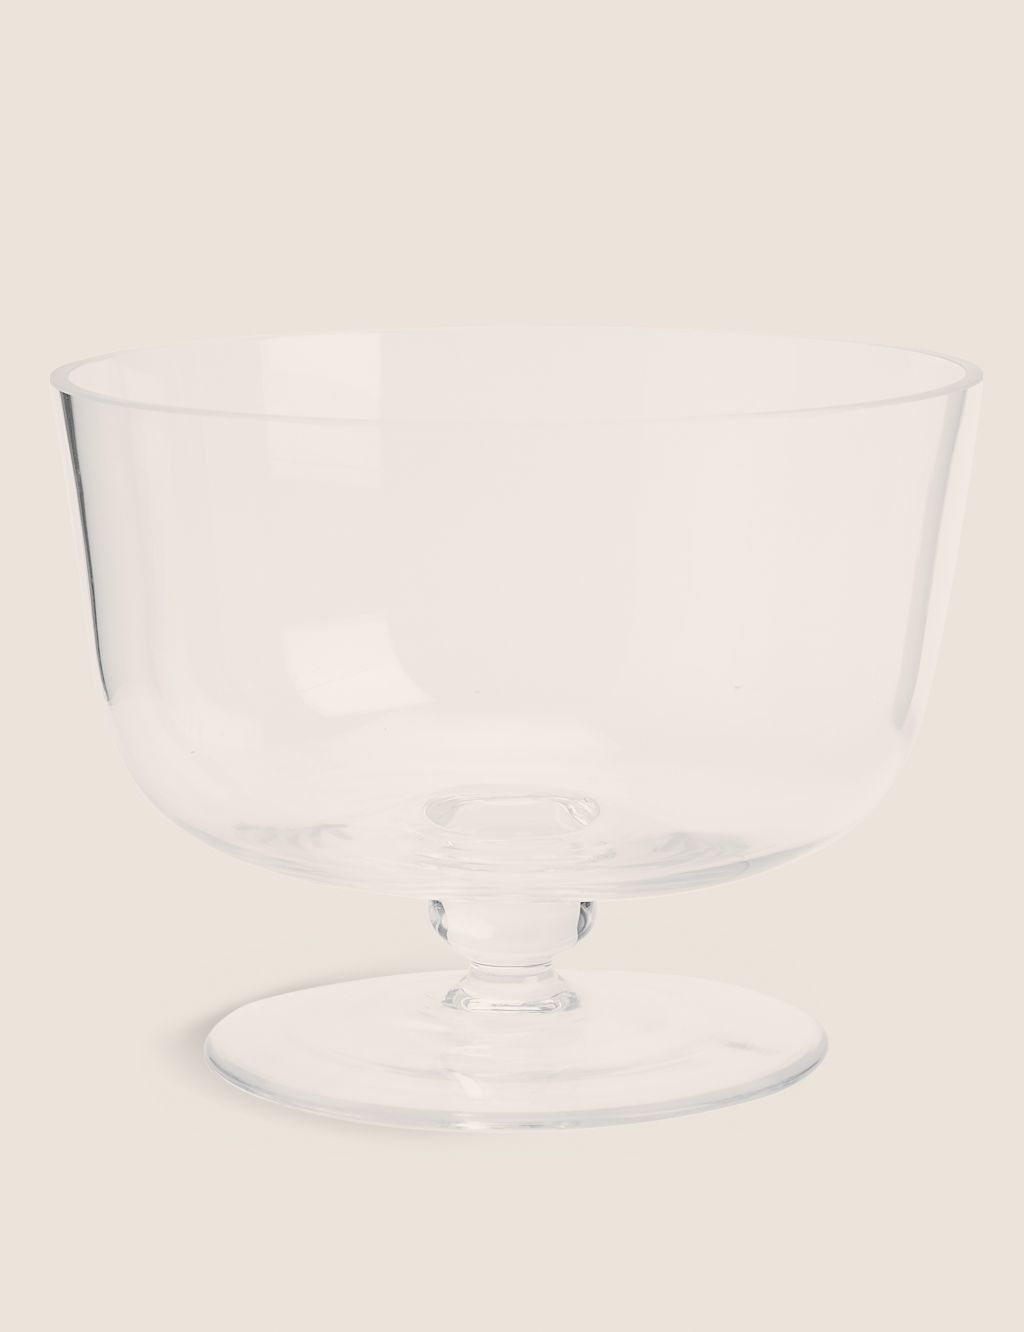 Trifle Bowl image 1